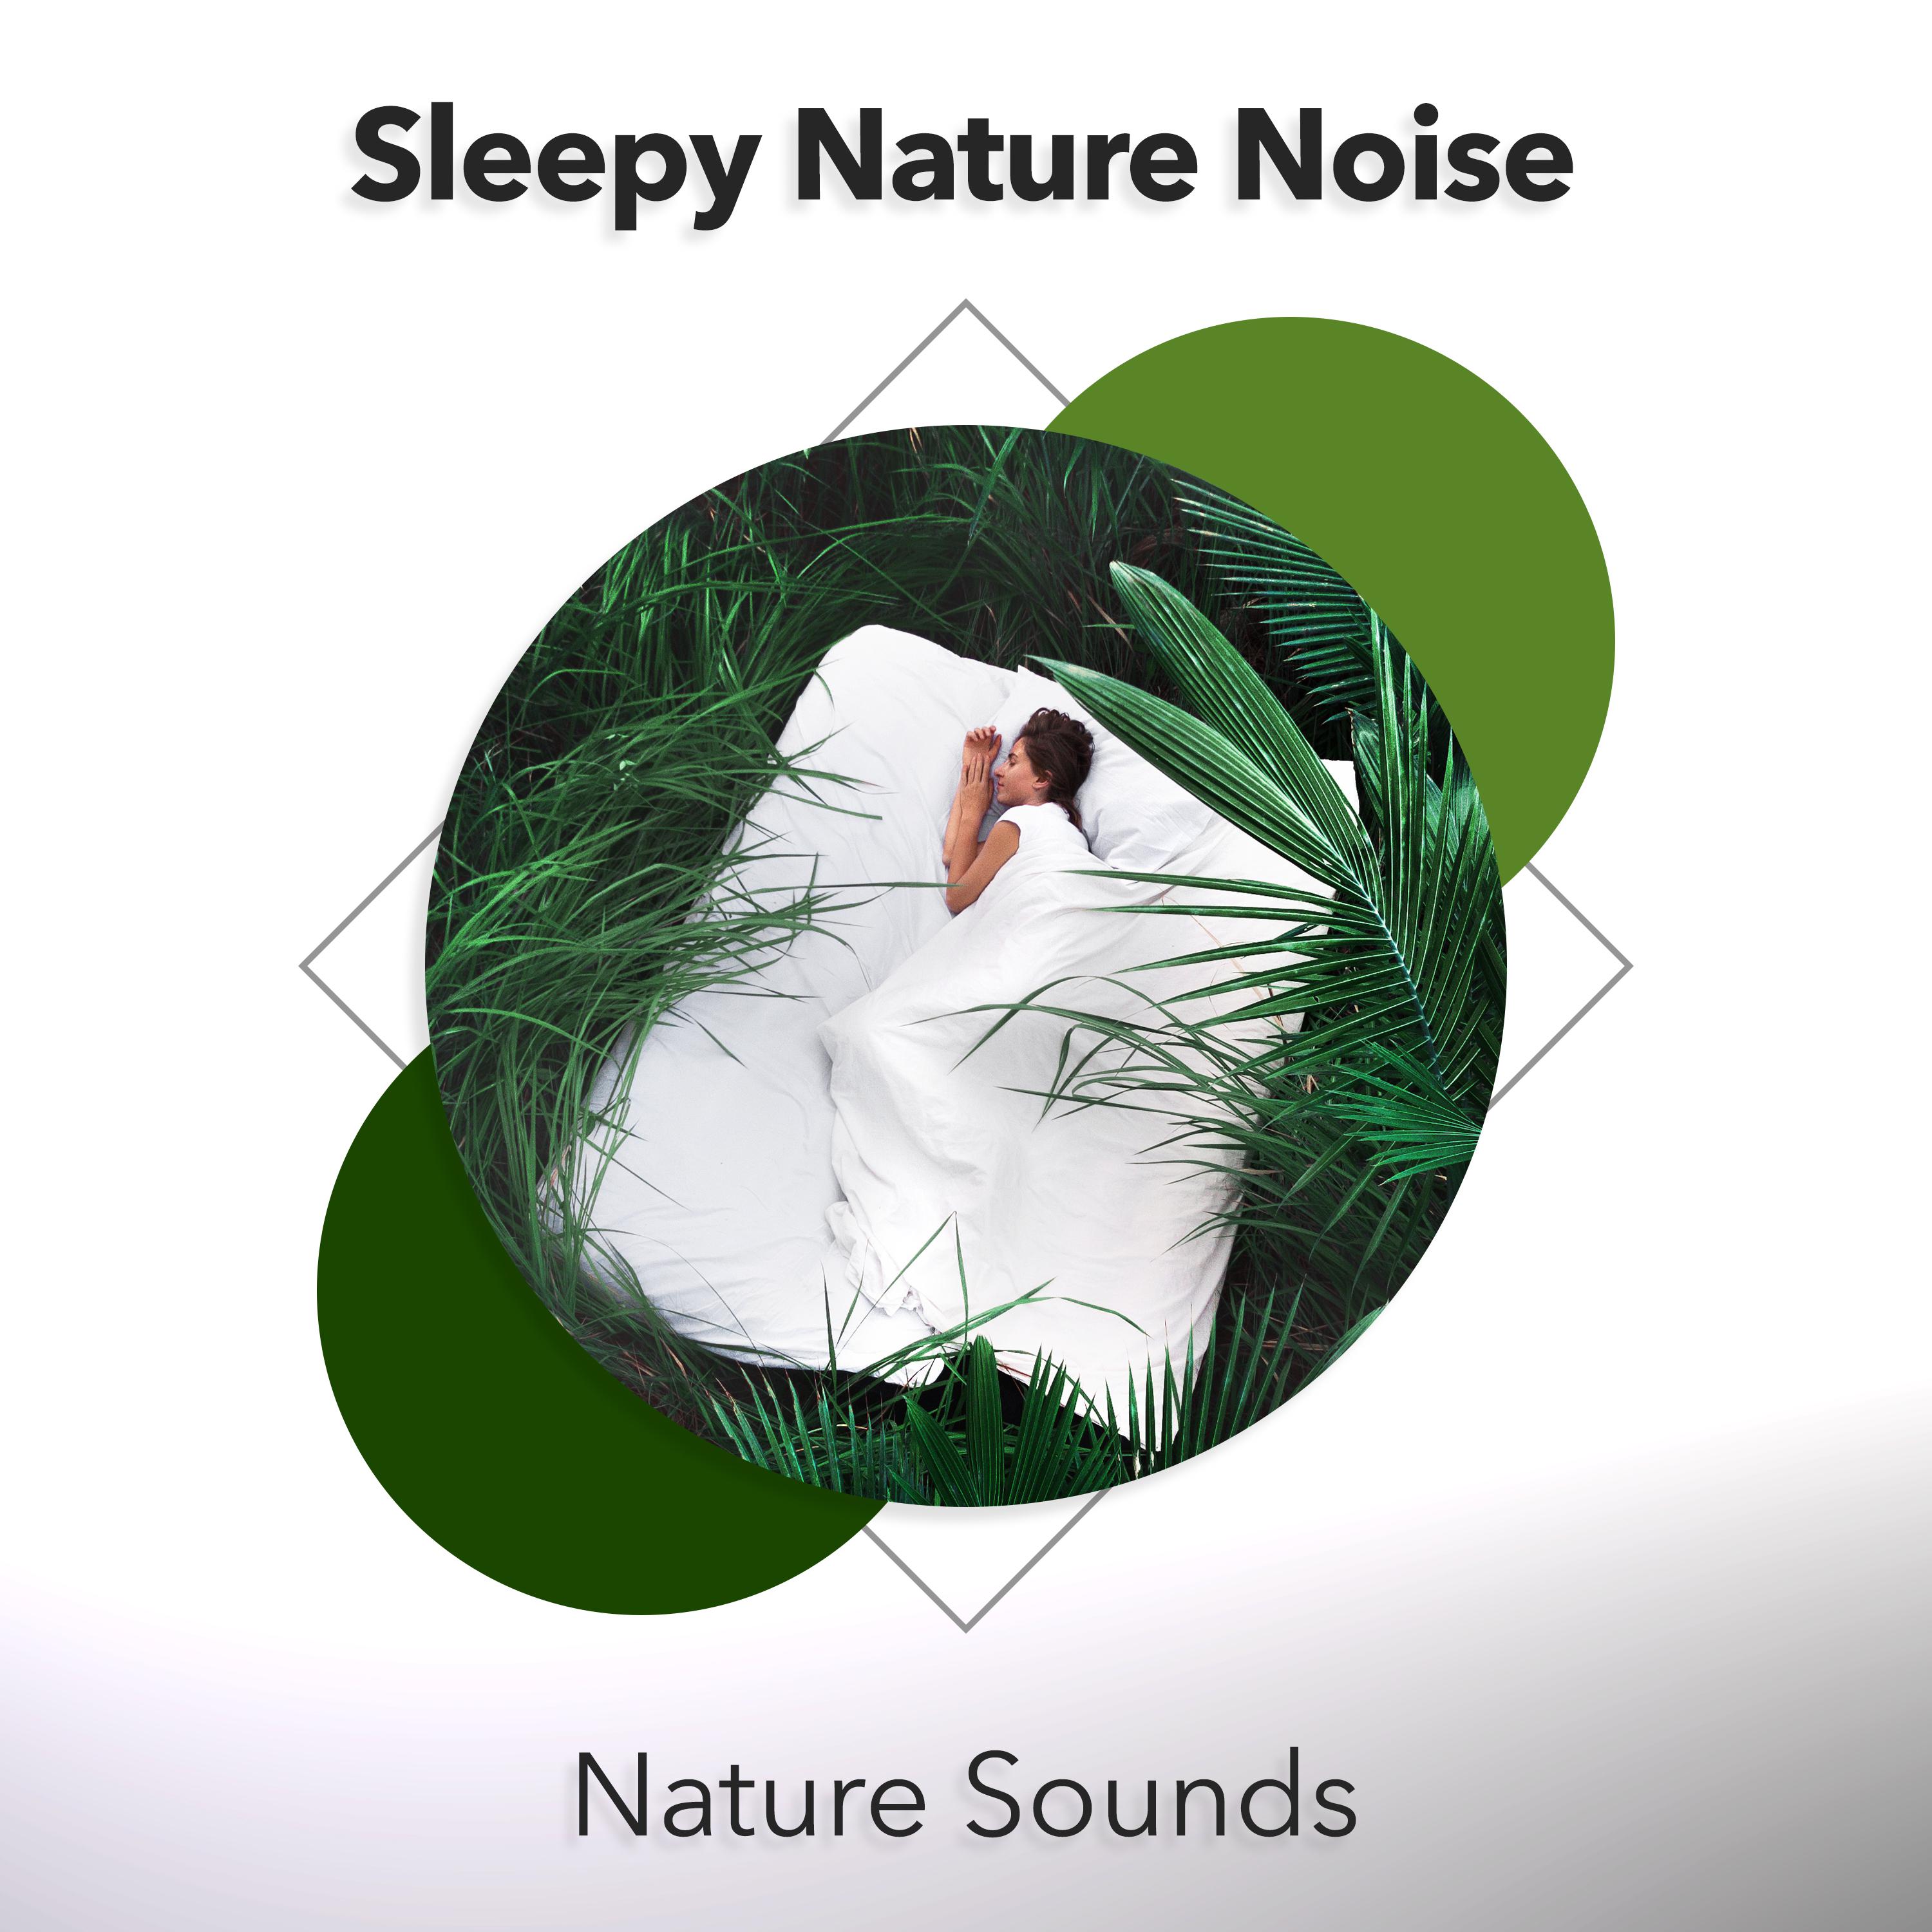 Sleepy Nature Noise